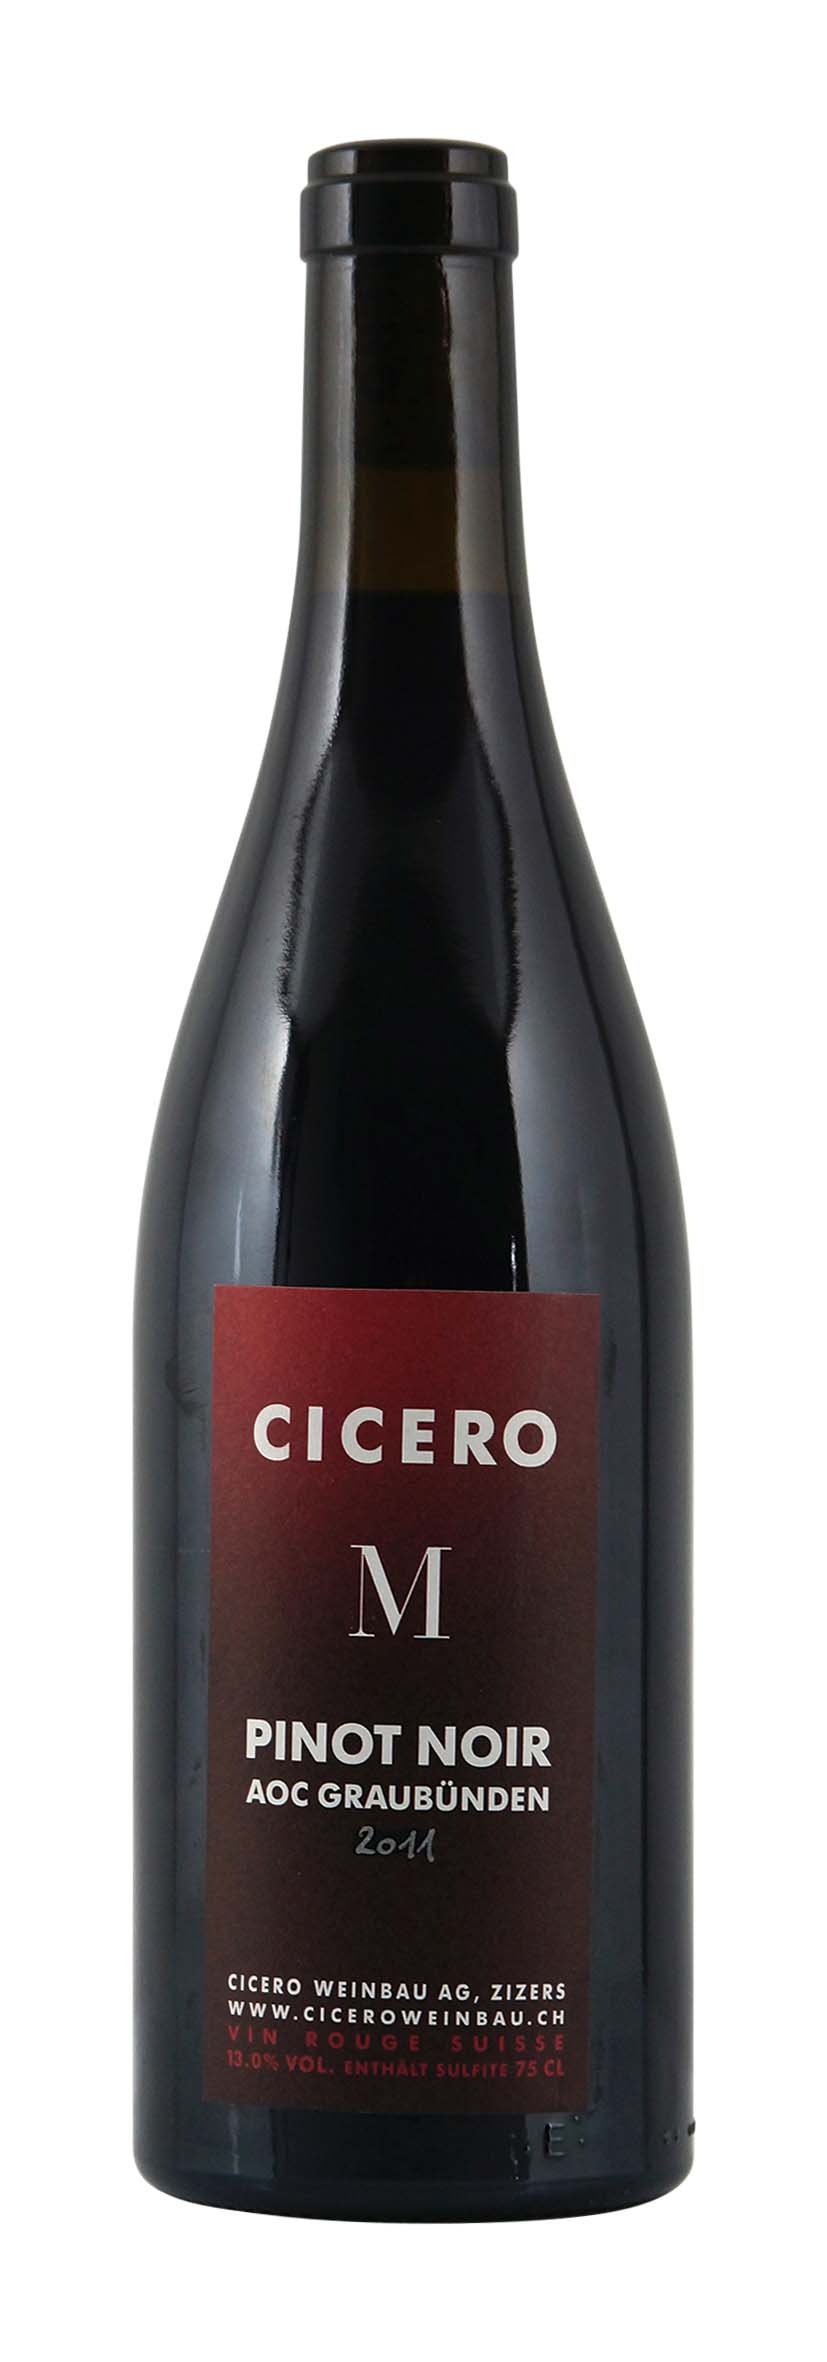 Graubünden AOC Pinot Noir Cicero M 2011